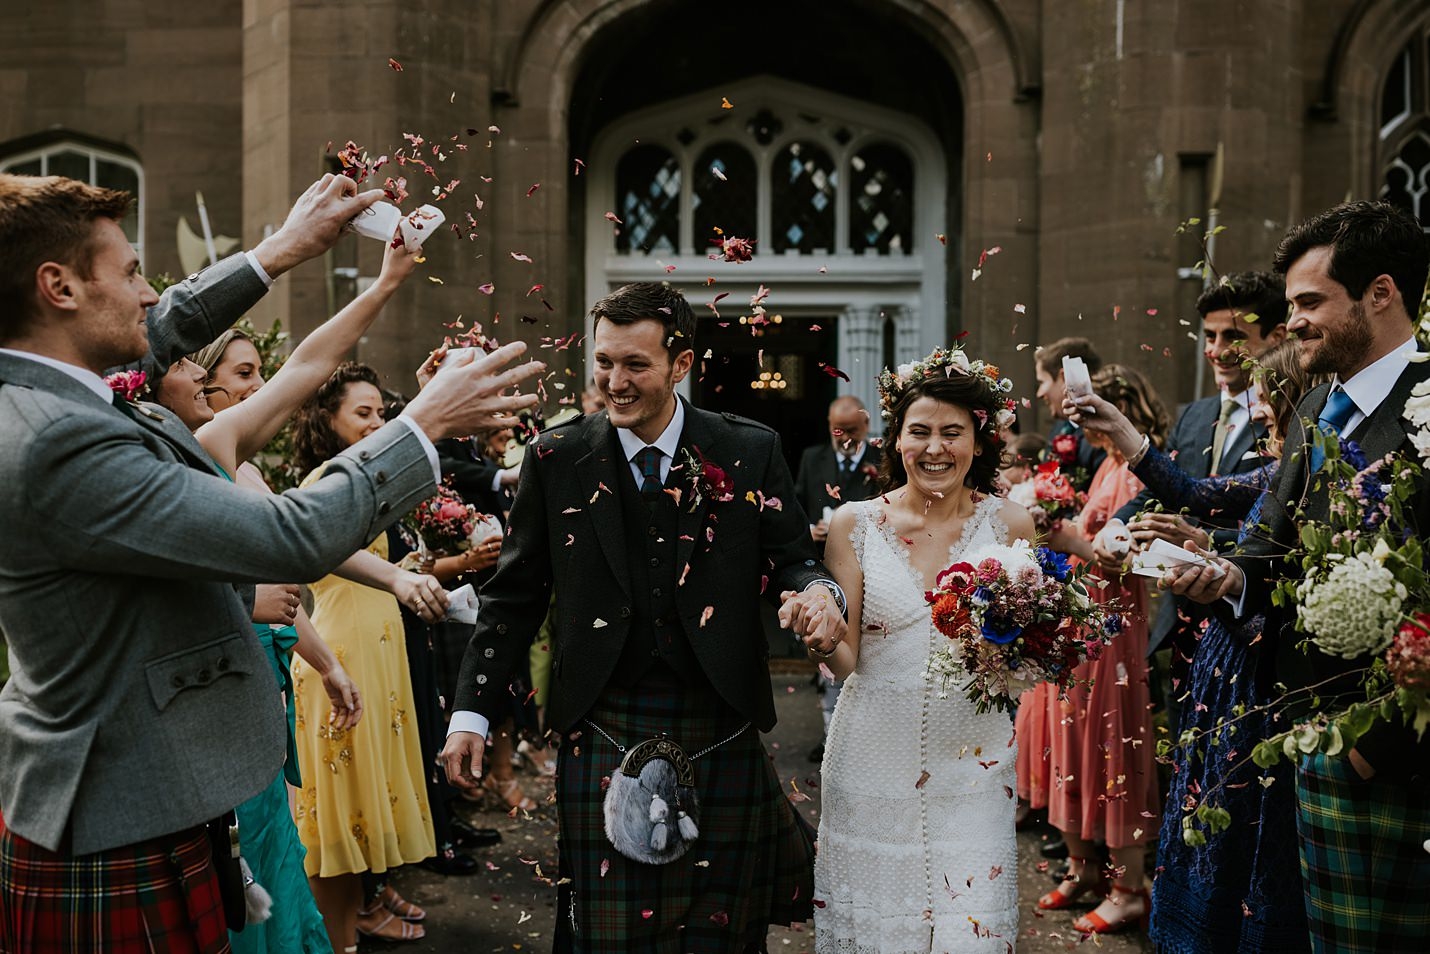 Drumtochty Castle confetti shot bride groom the flower pavilion bridal crown & colourful bouquet chiffon and lace Catherine Deane bridal gown